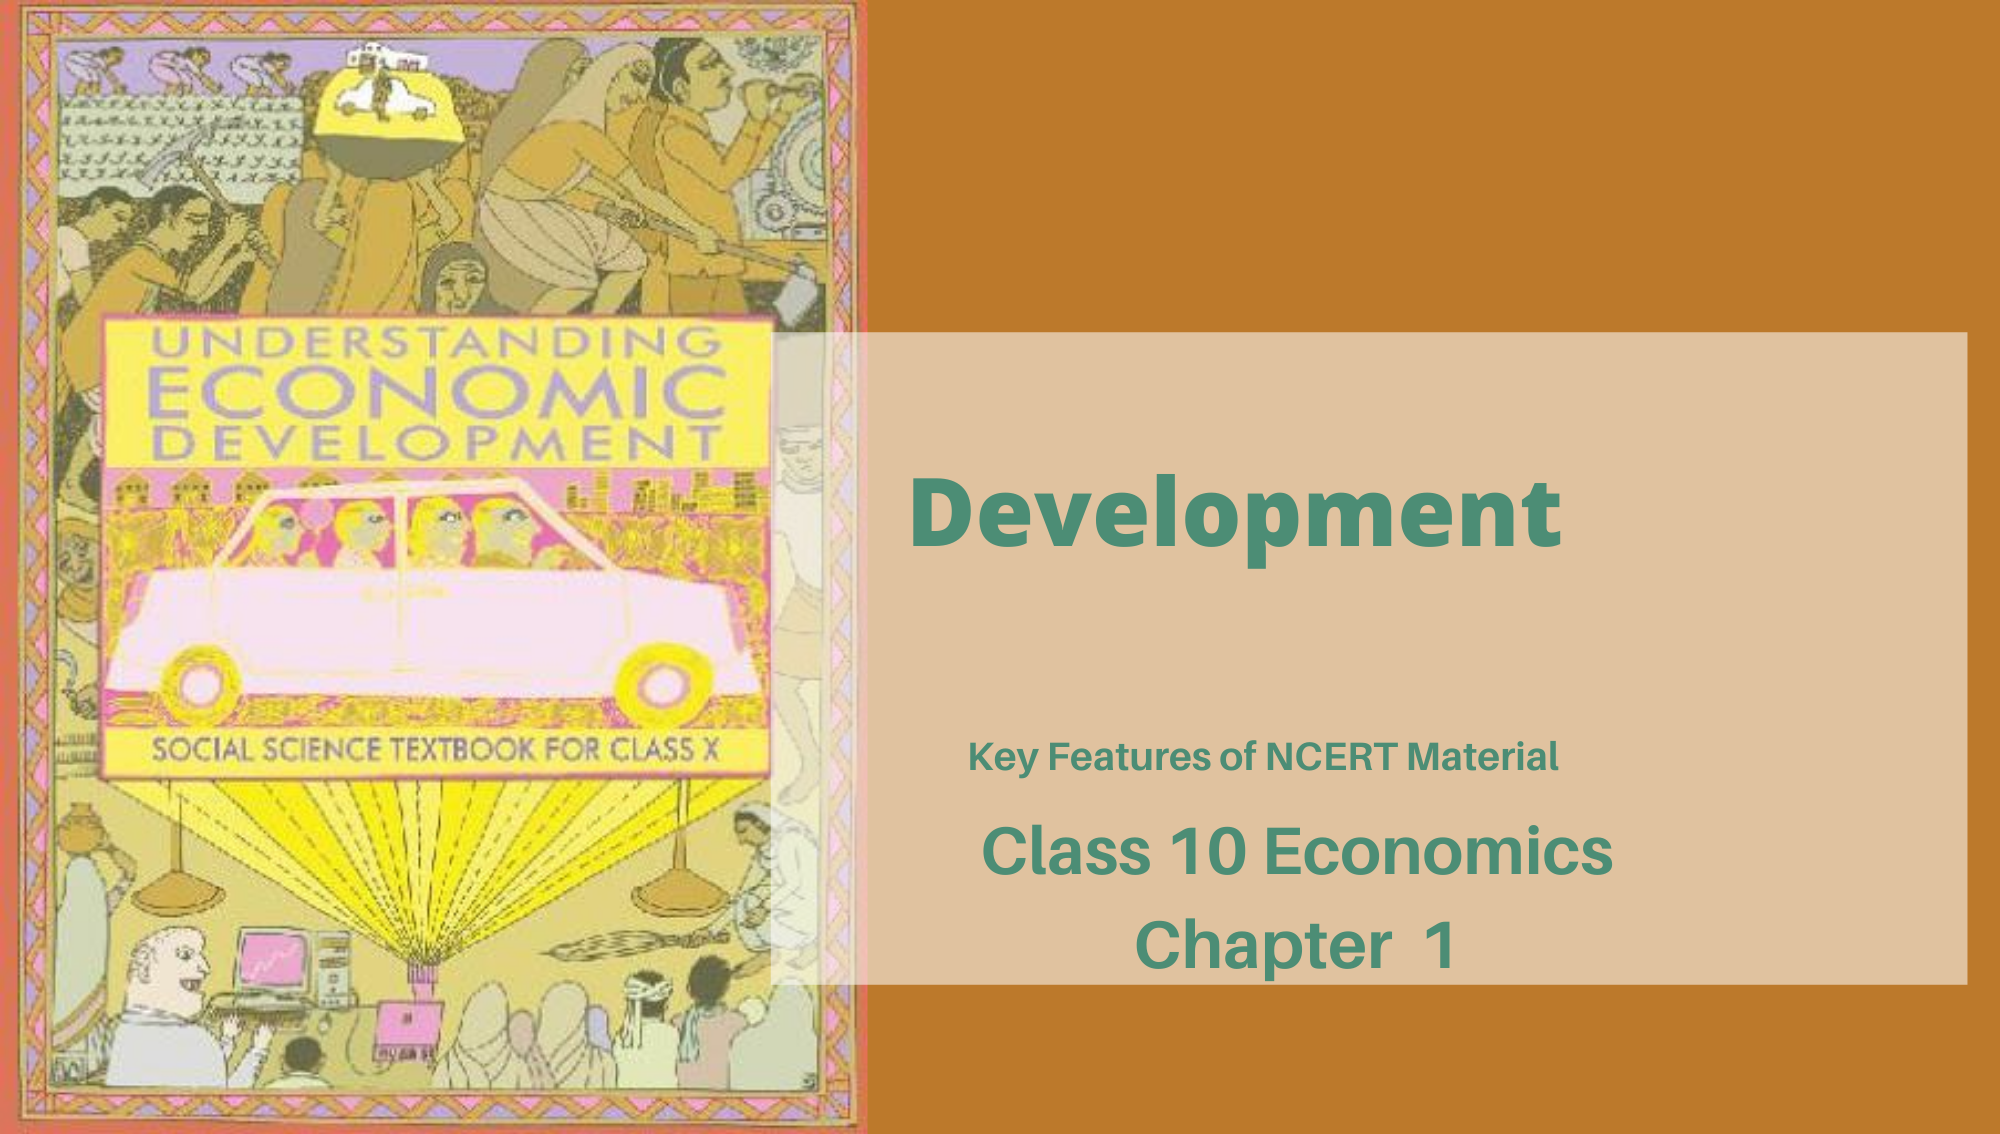 class 10 economics development case study